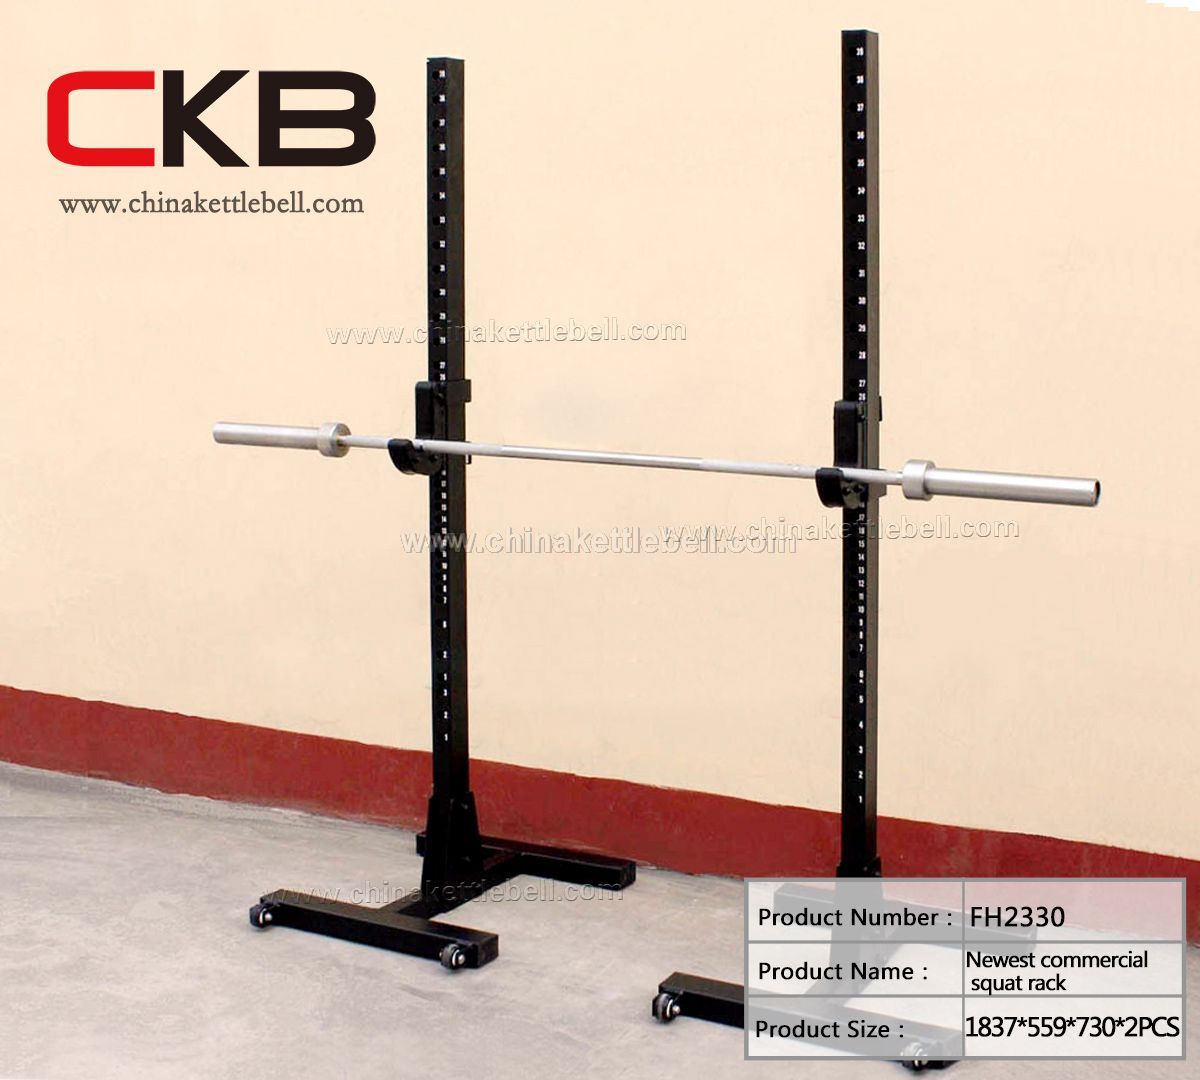 Newest commercial squat rack